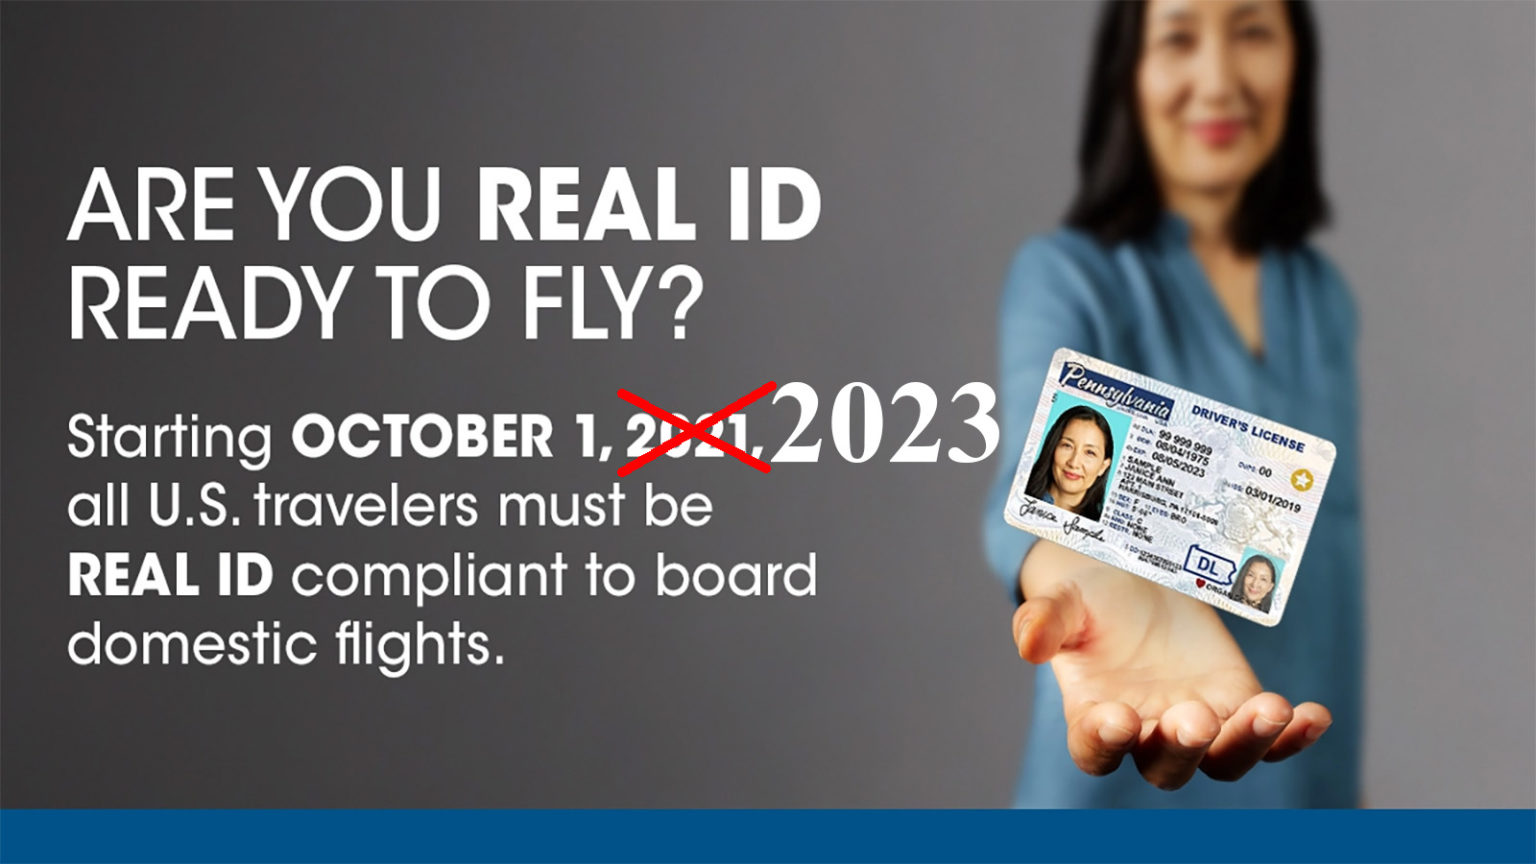 tsa air travel id requirements